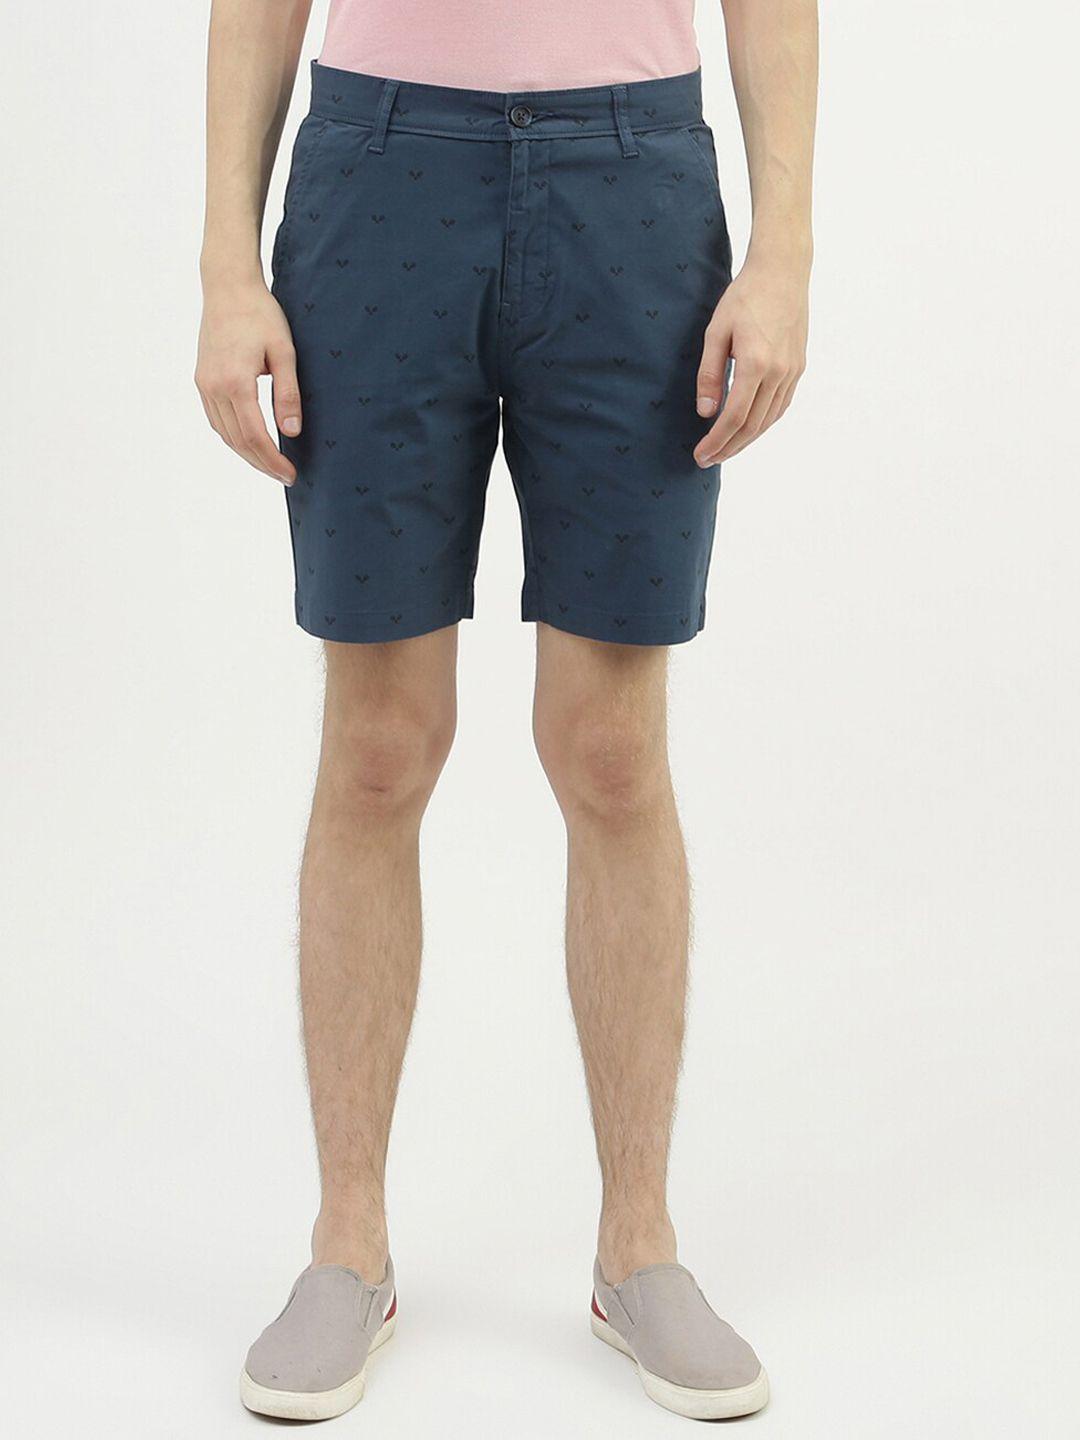 united-colors-of-benetton-men-conversational-cotton-printed-slim-fit-shorts